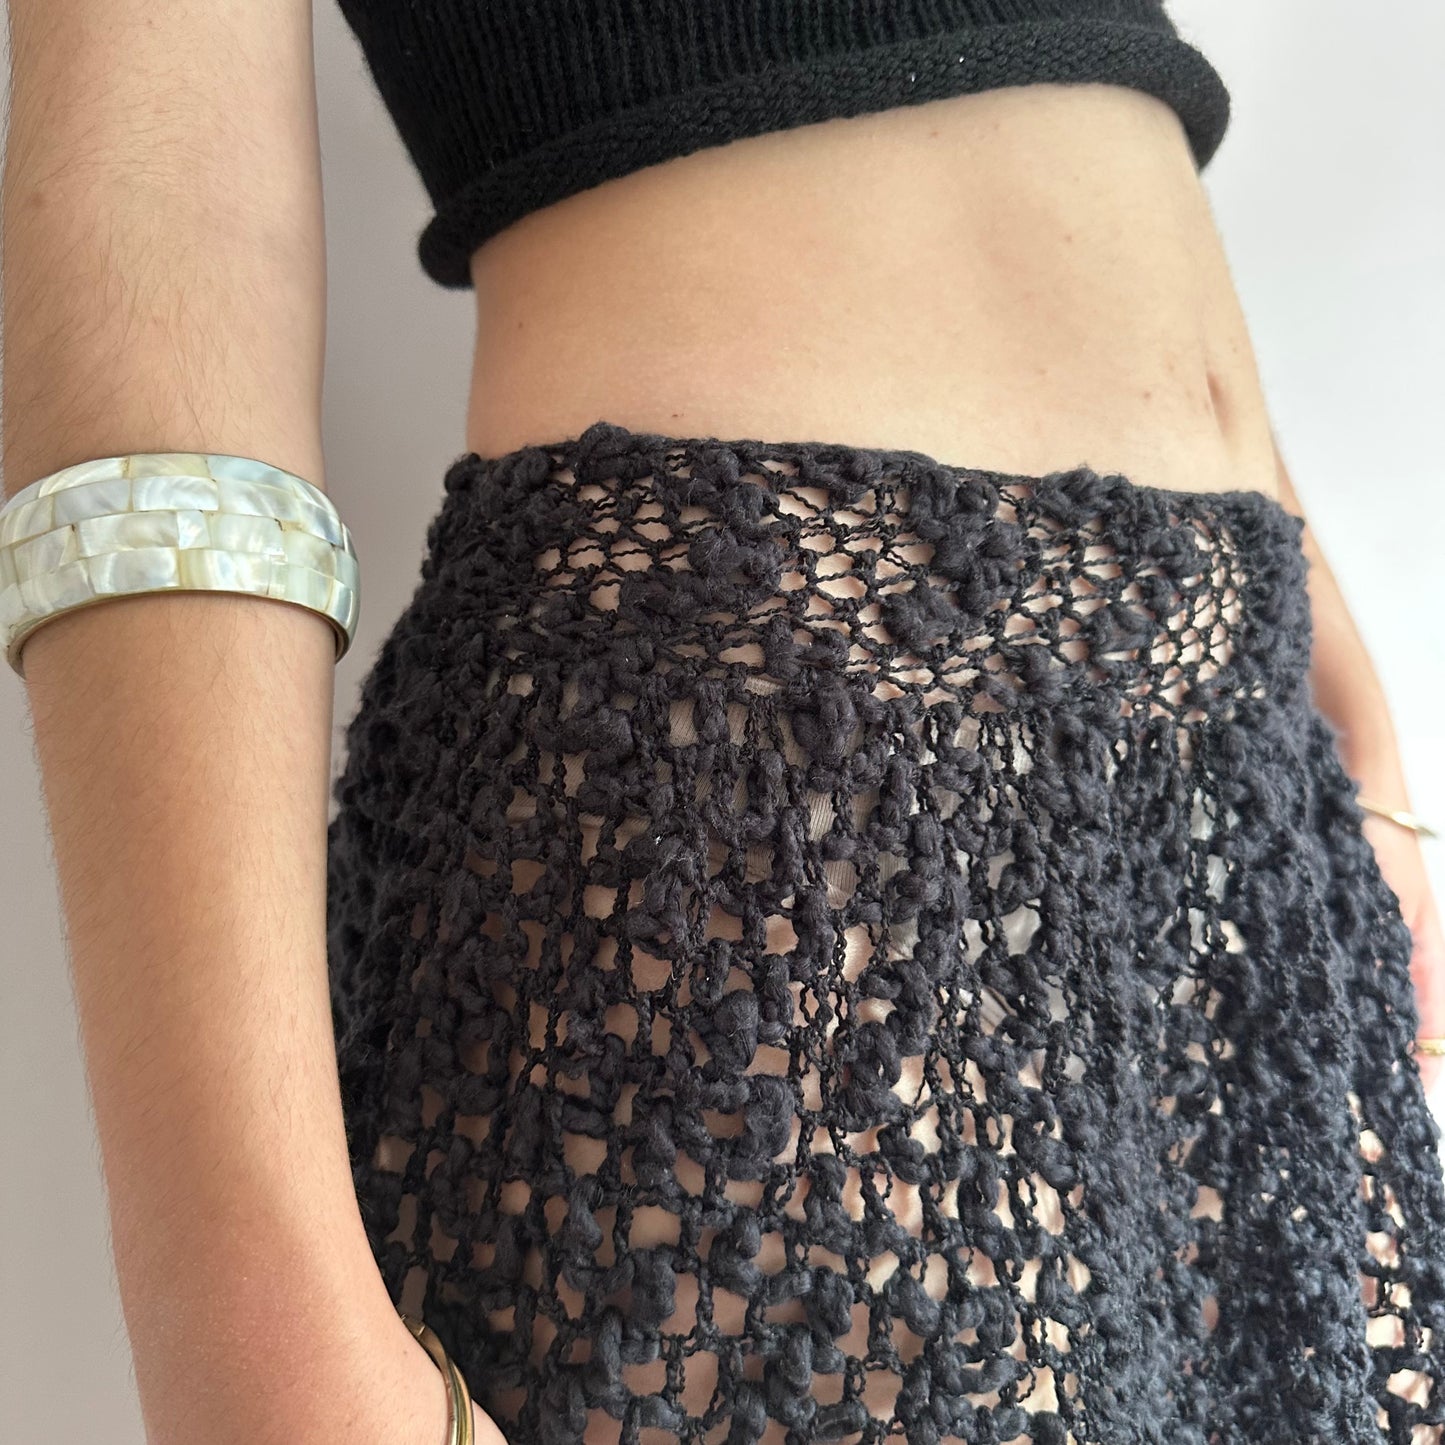 Handmade lace crochet rara skirt in black